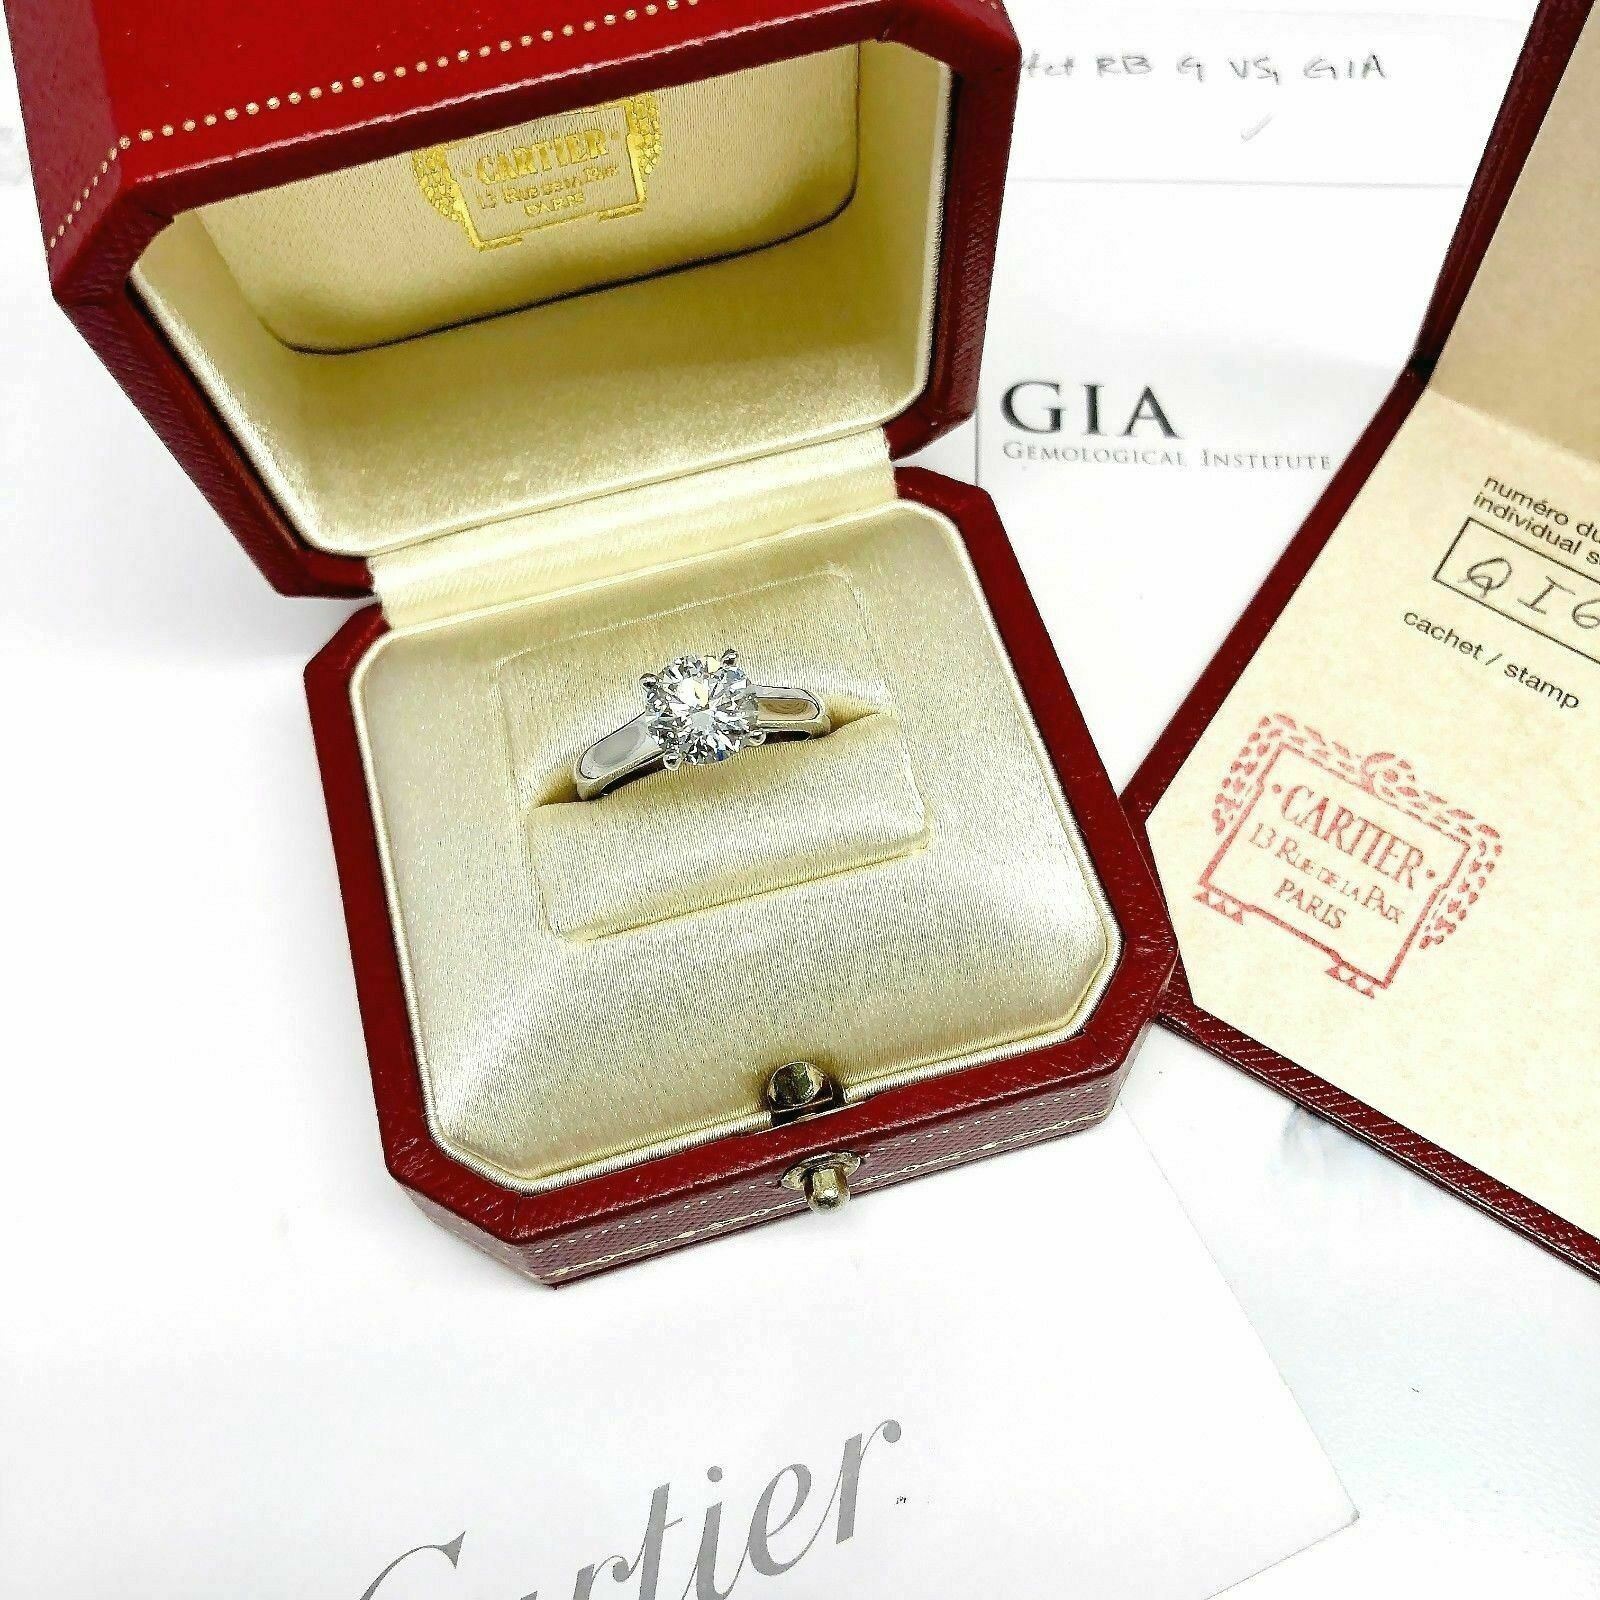 Original Cartier Platinum Ring 2.14 Carats GIA G VS1 Round Diamond Cut w Reciept